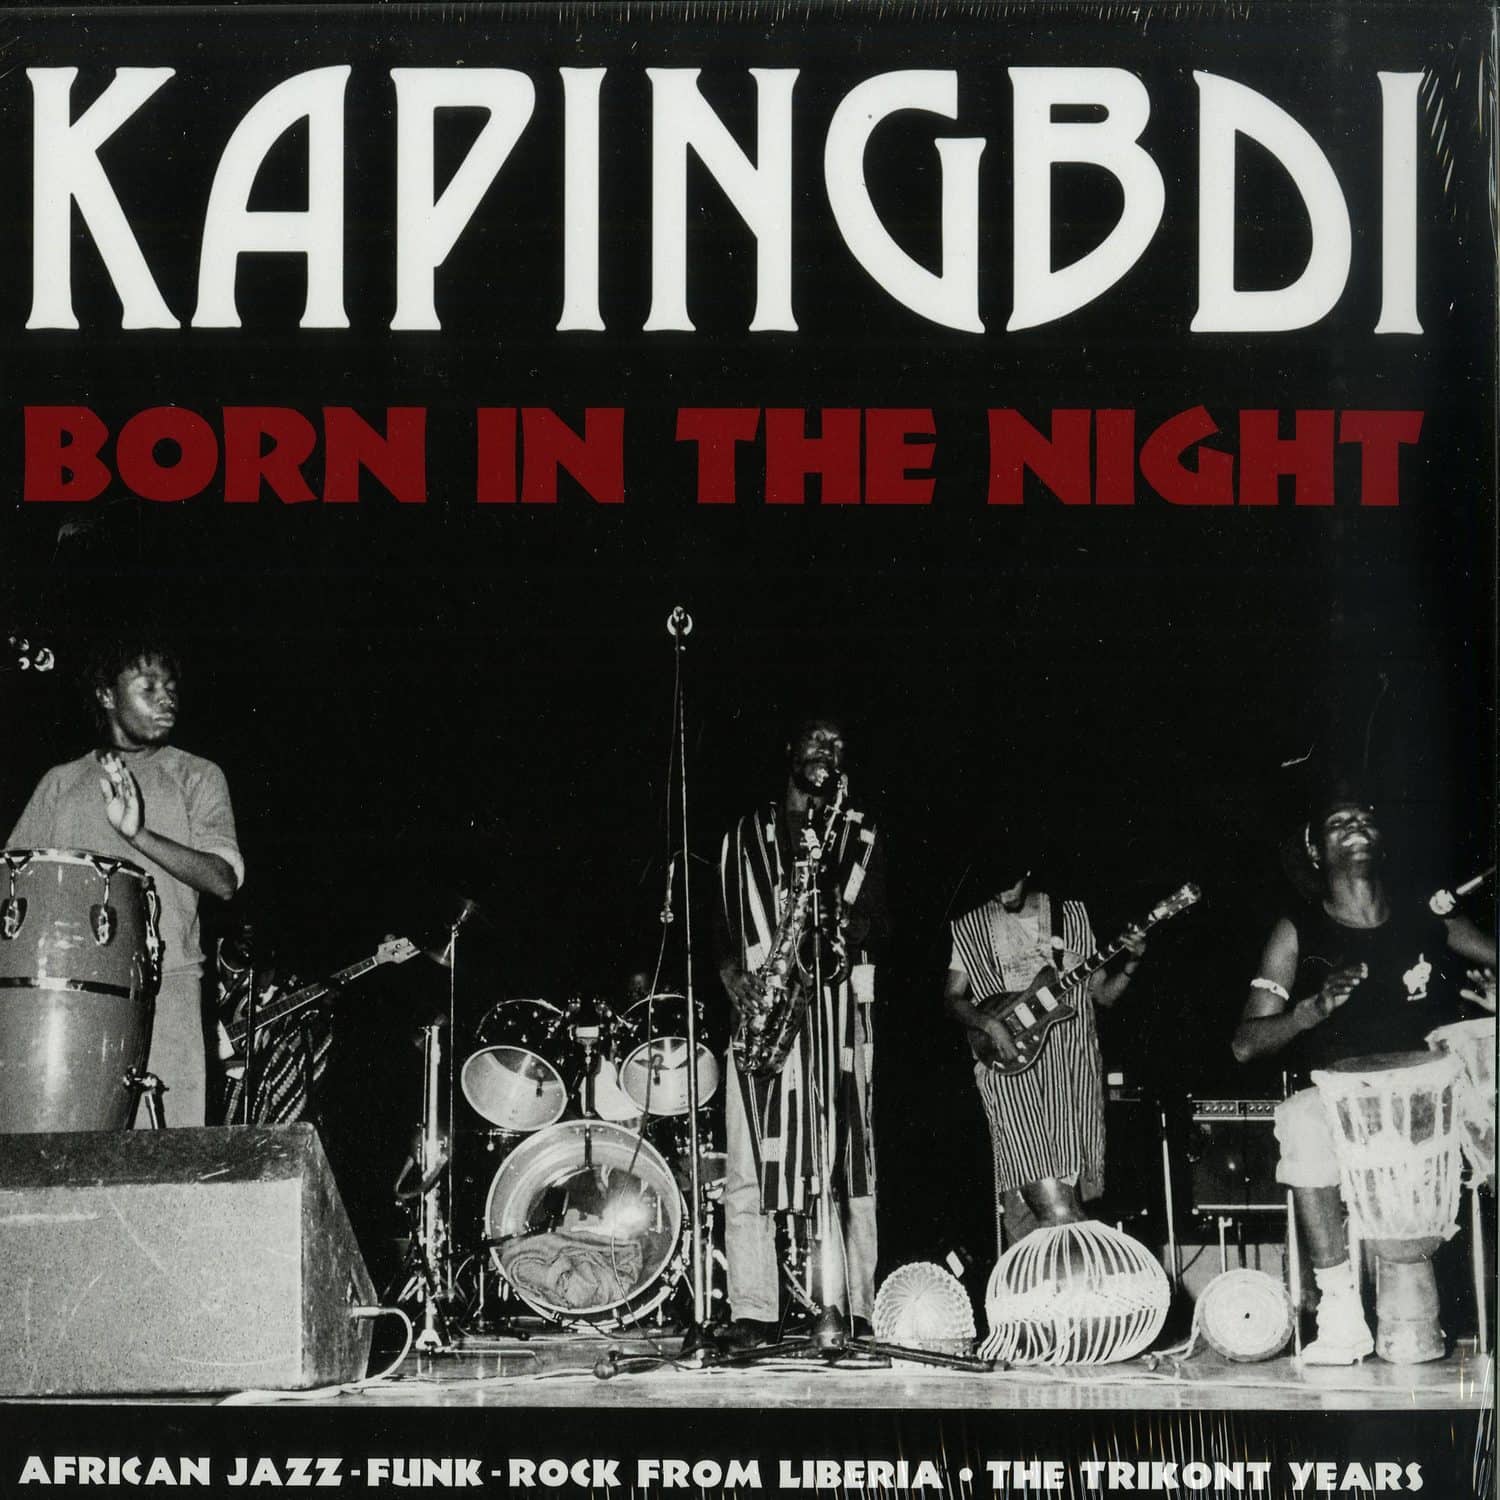 Kapingbdi - BORN IN THE NIGHT 